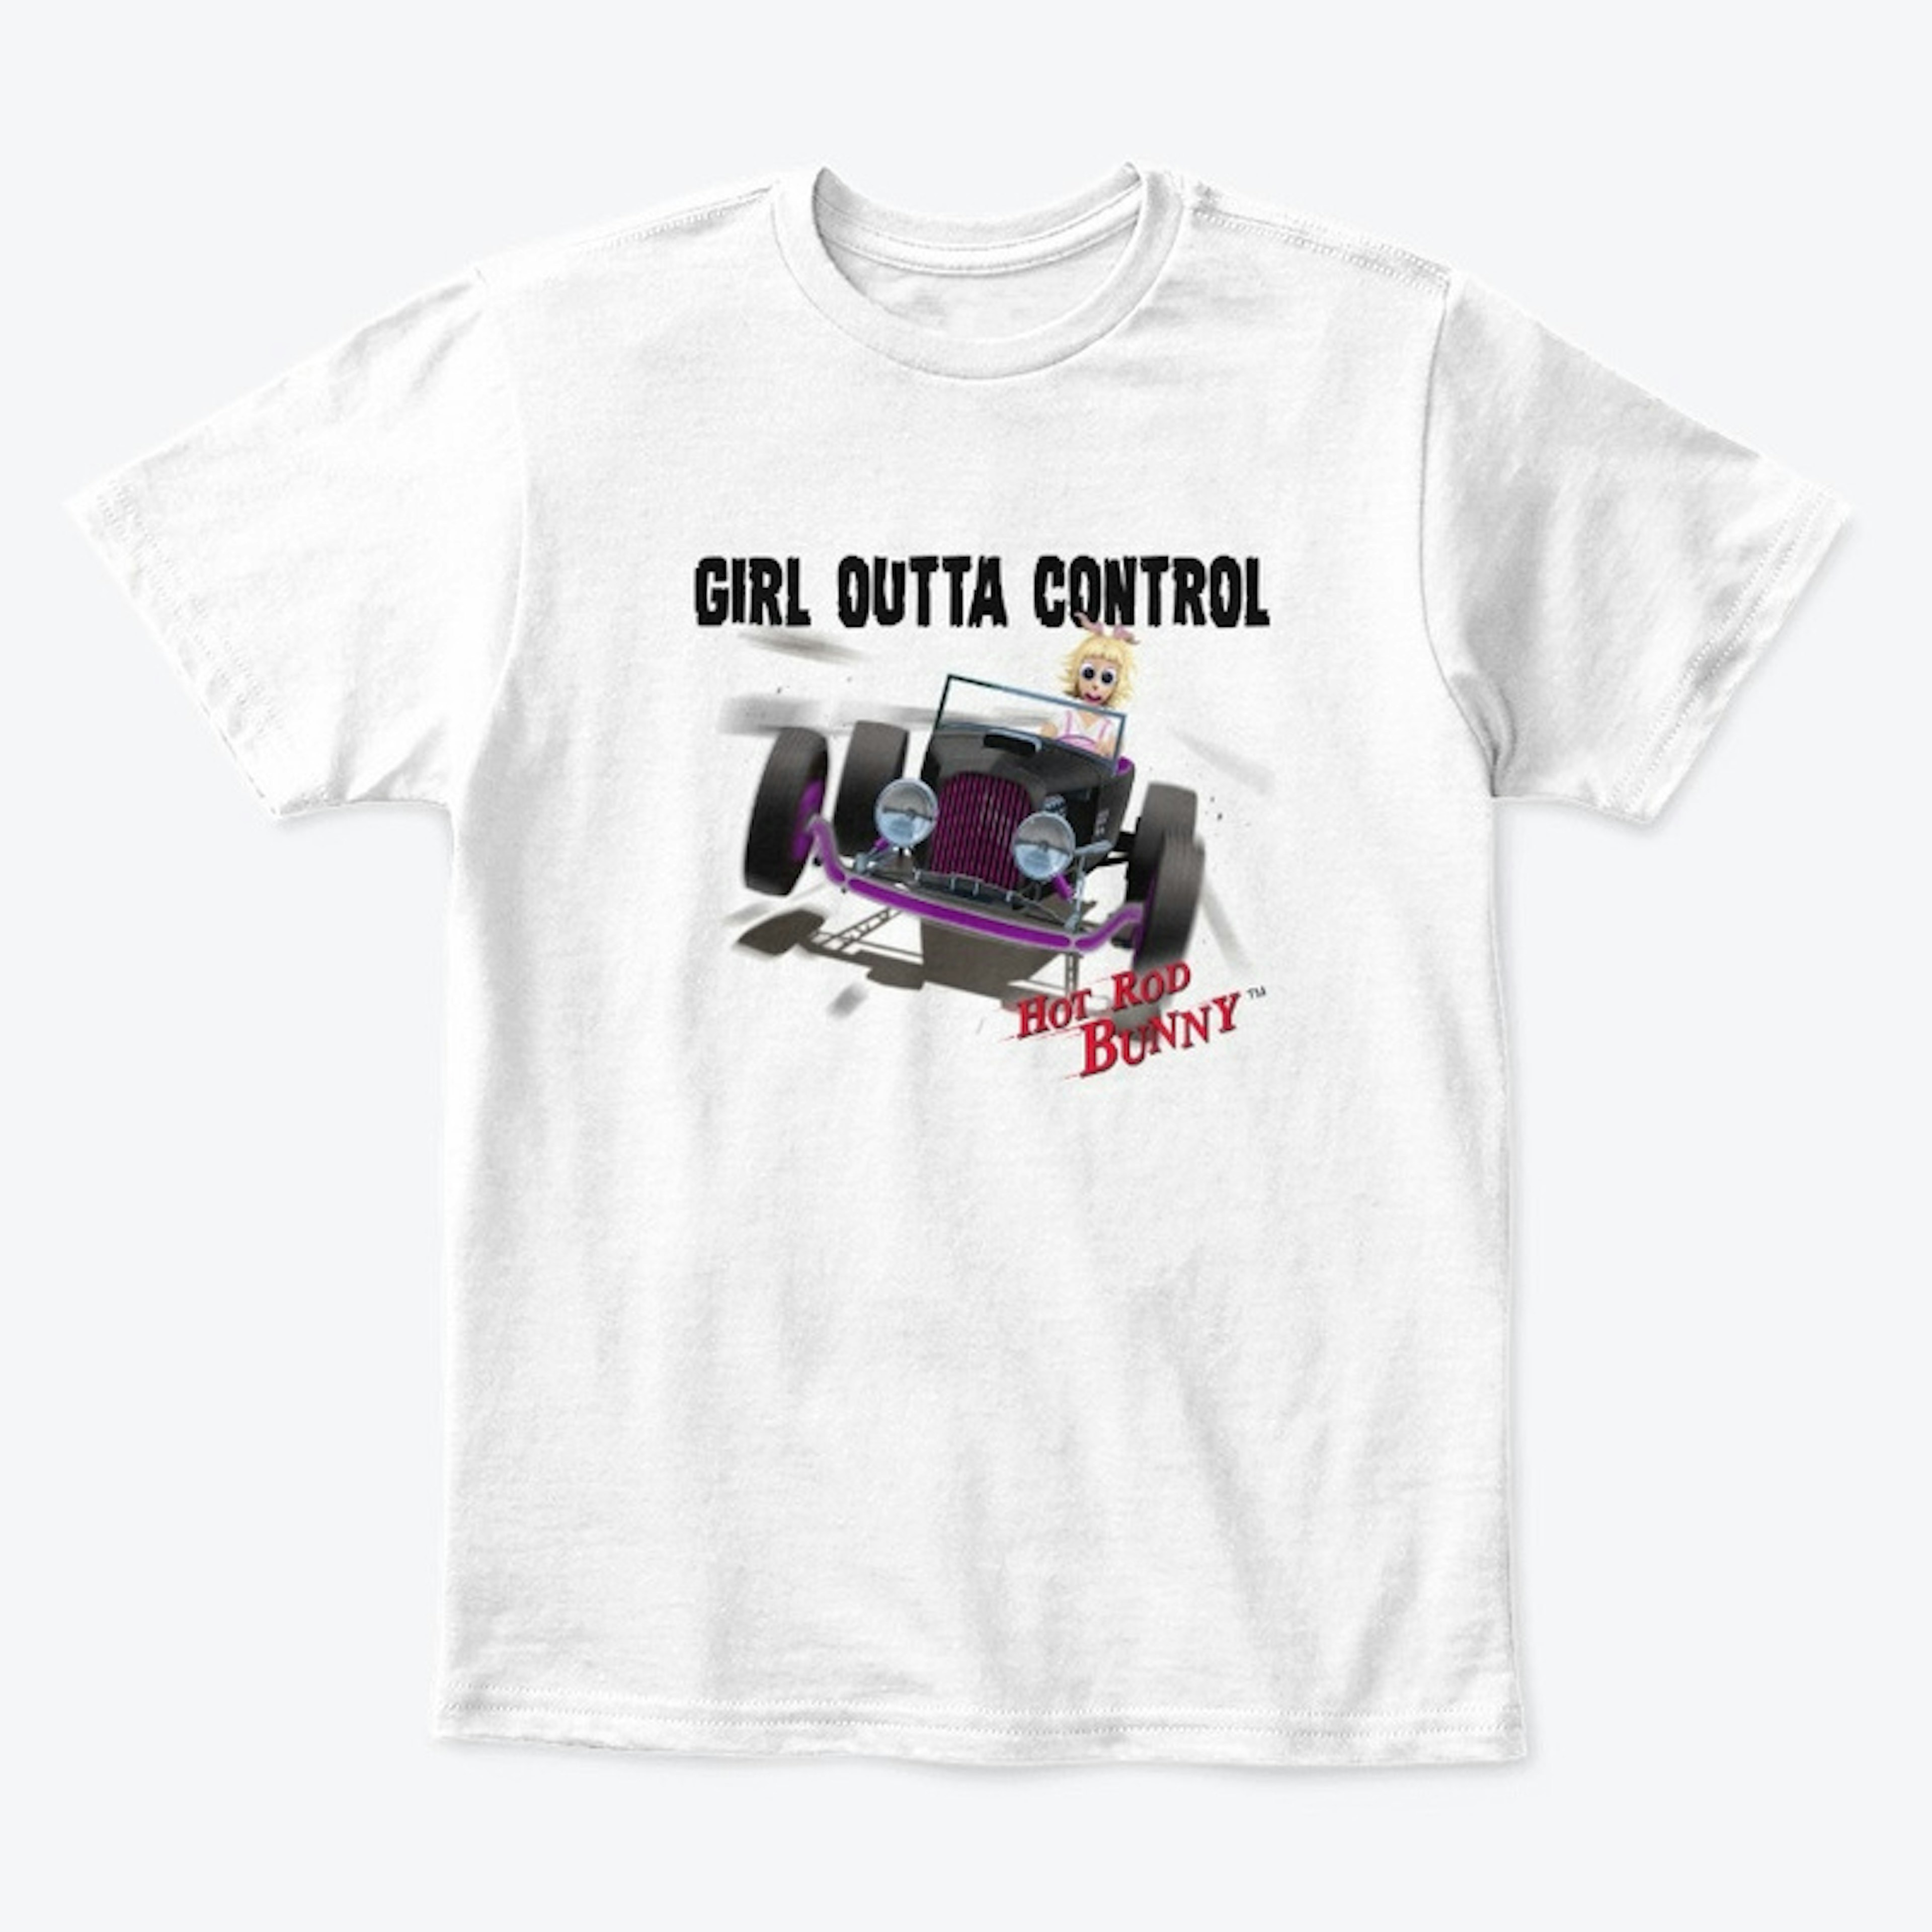 Hot Rod Bunny "Girl Outta Control"